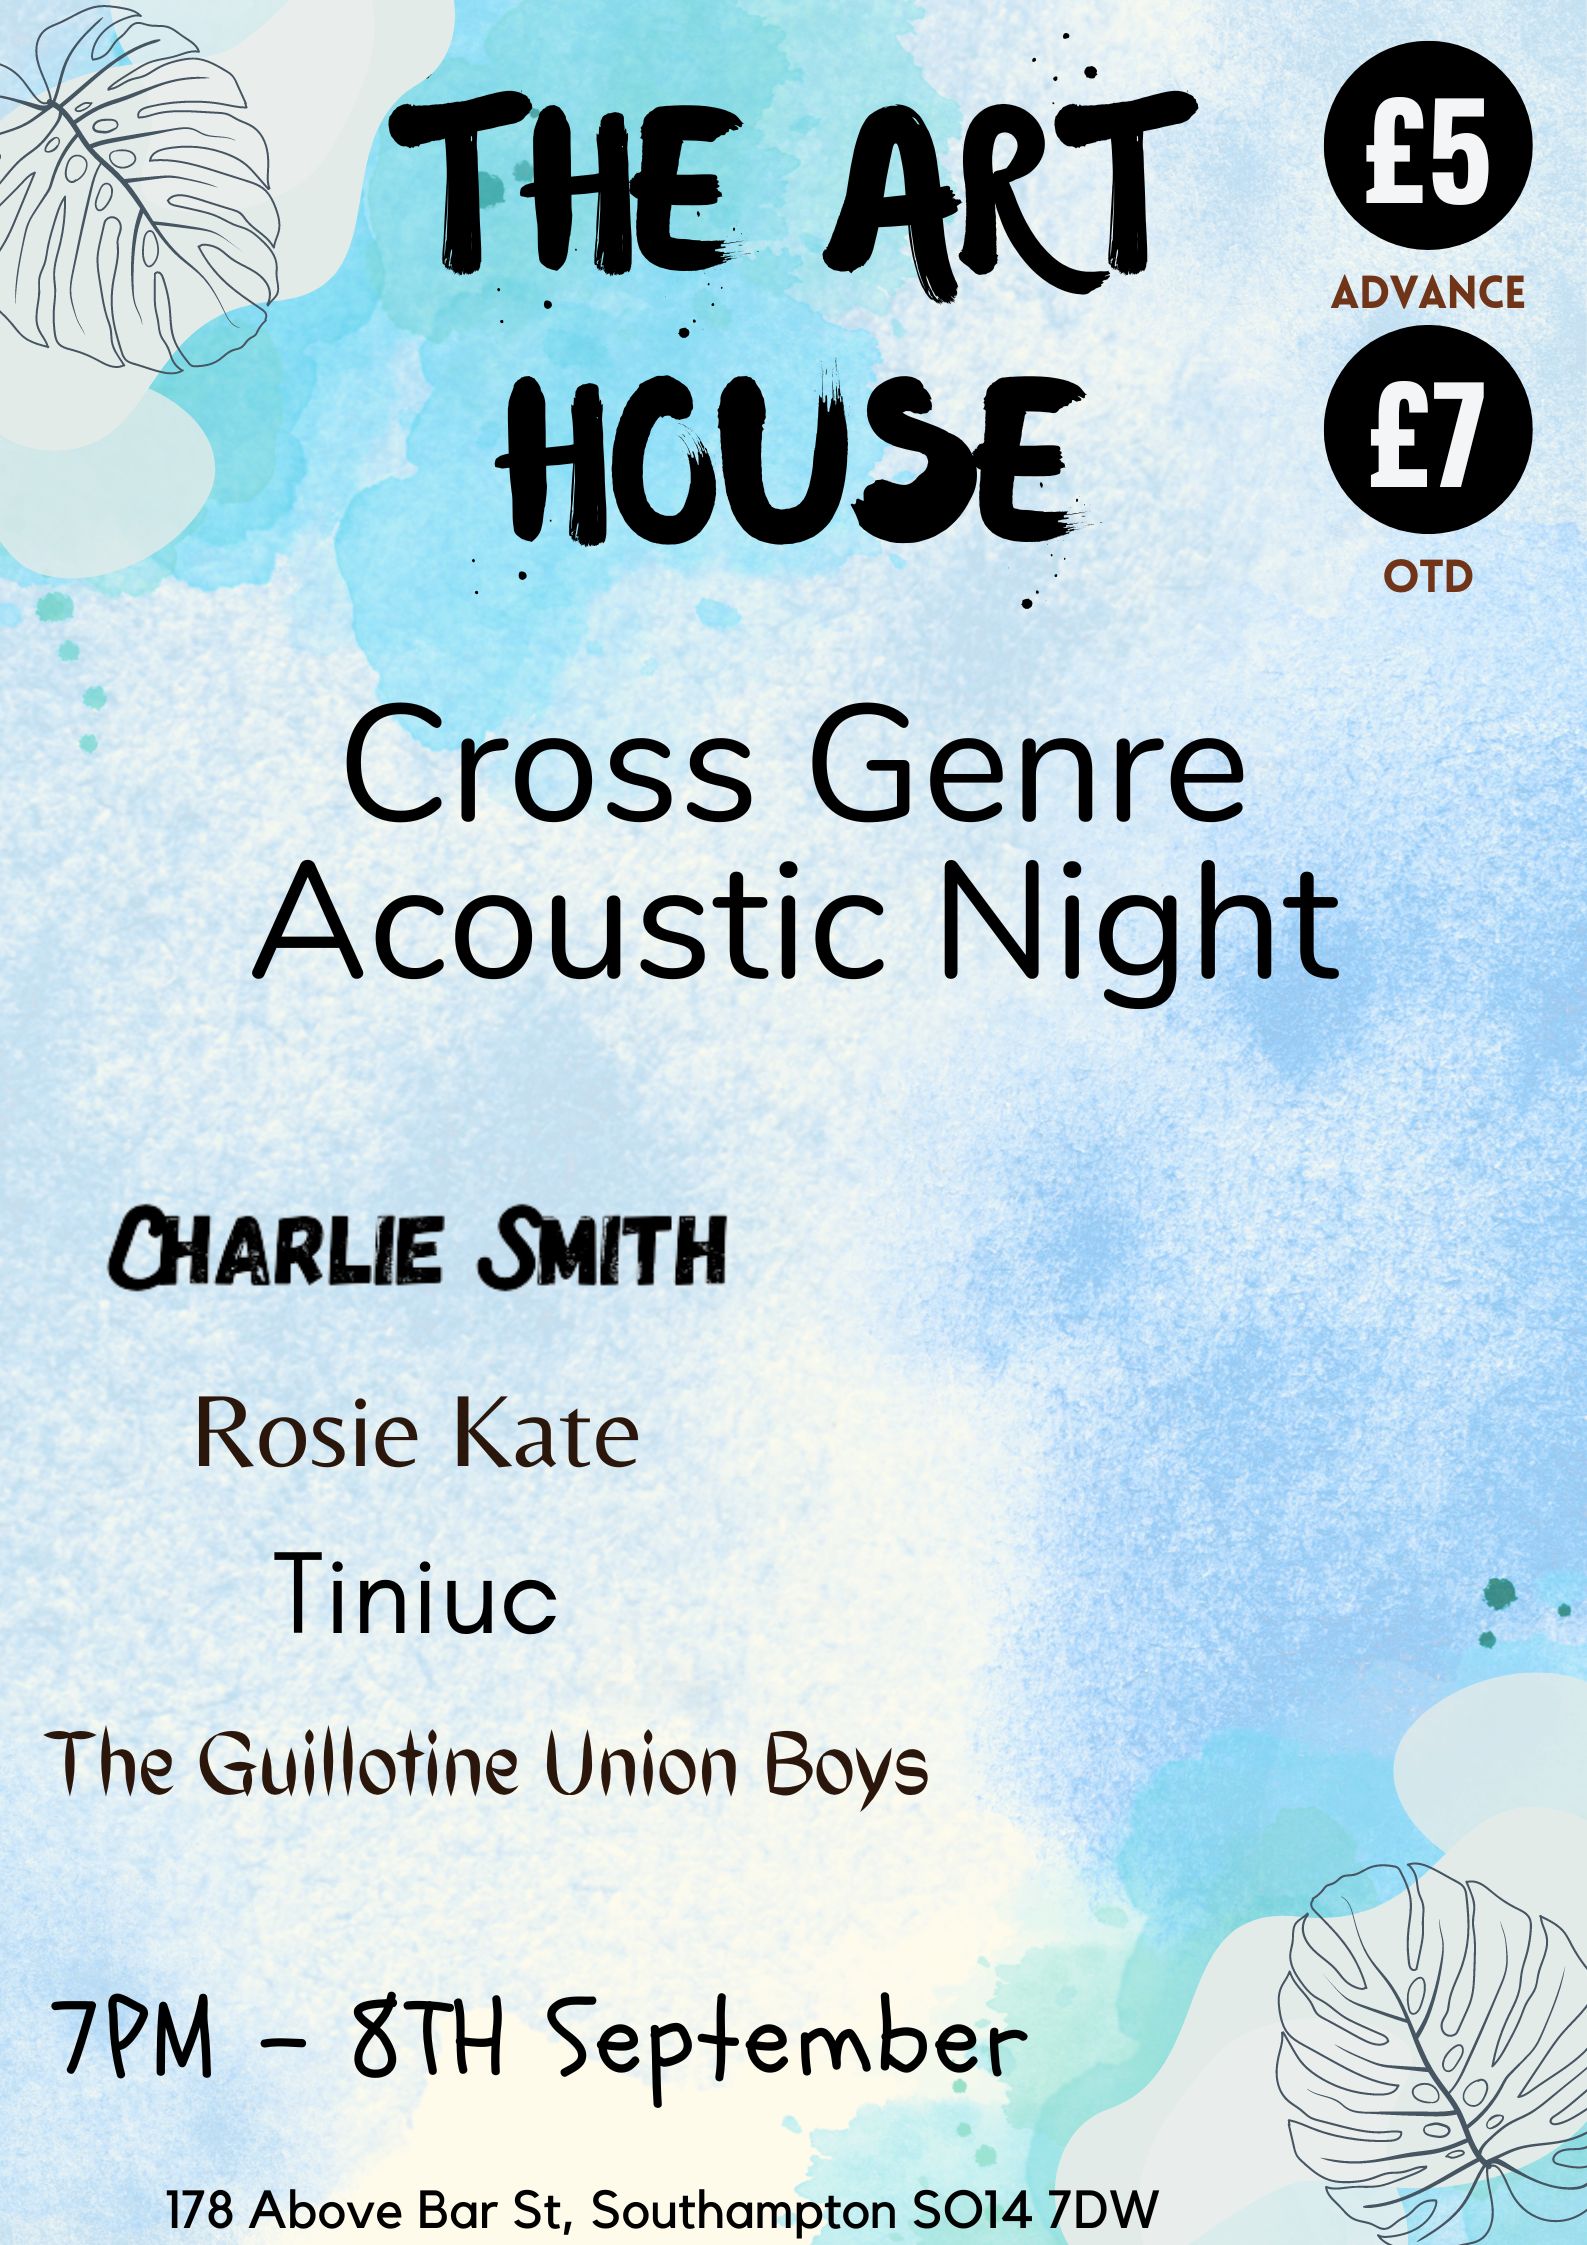 Cross Genre Acoustic Night @ The Art House